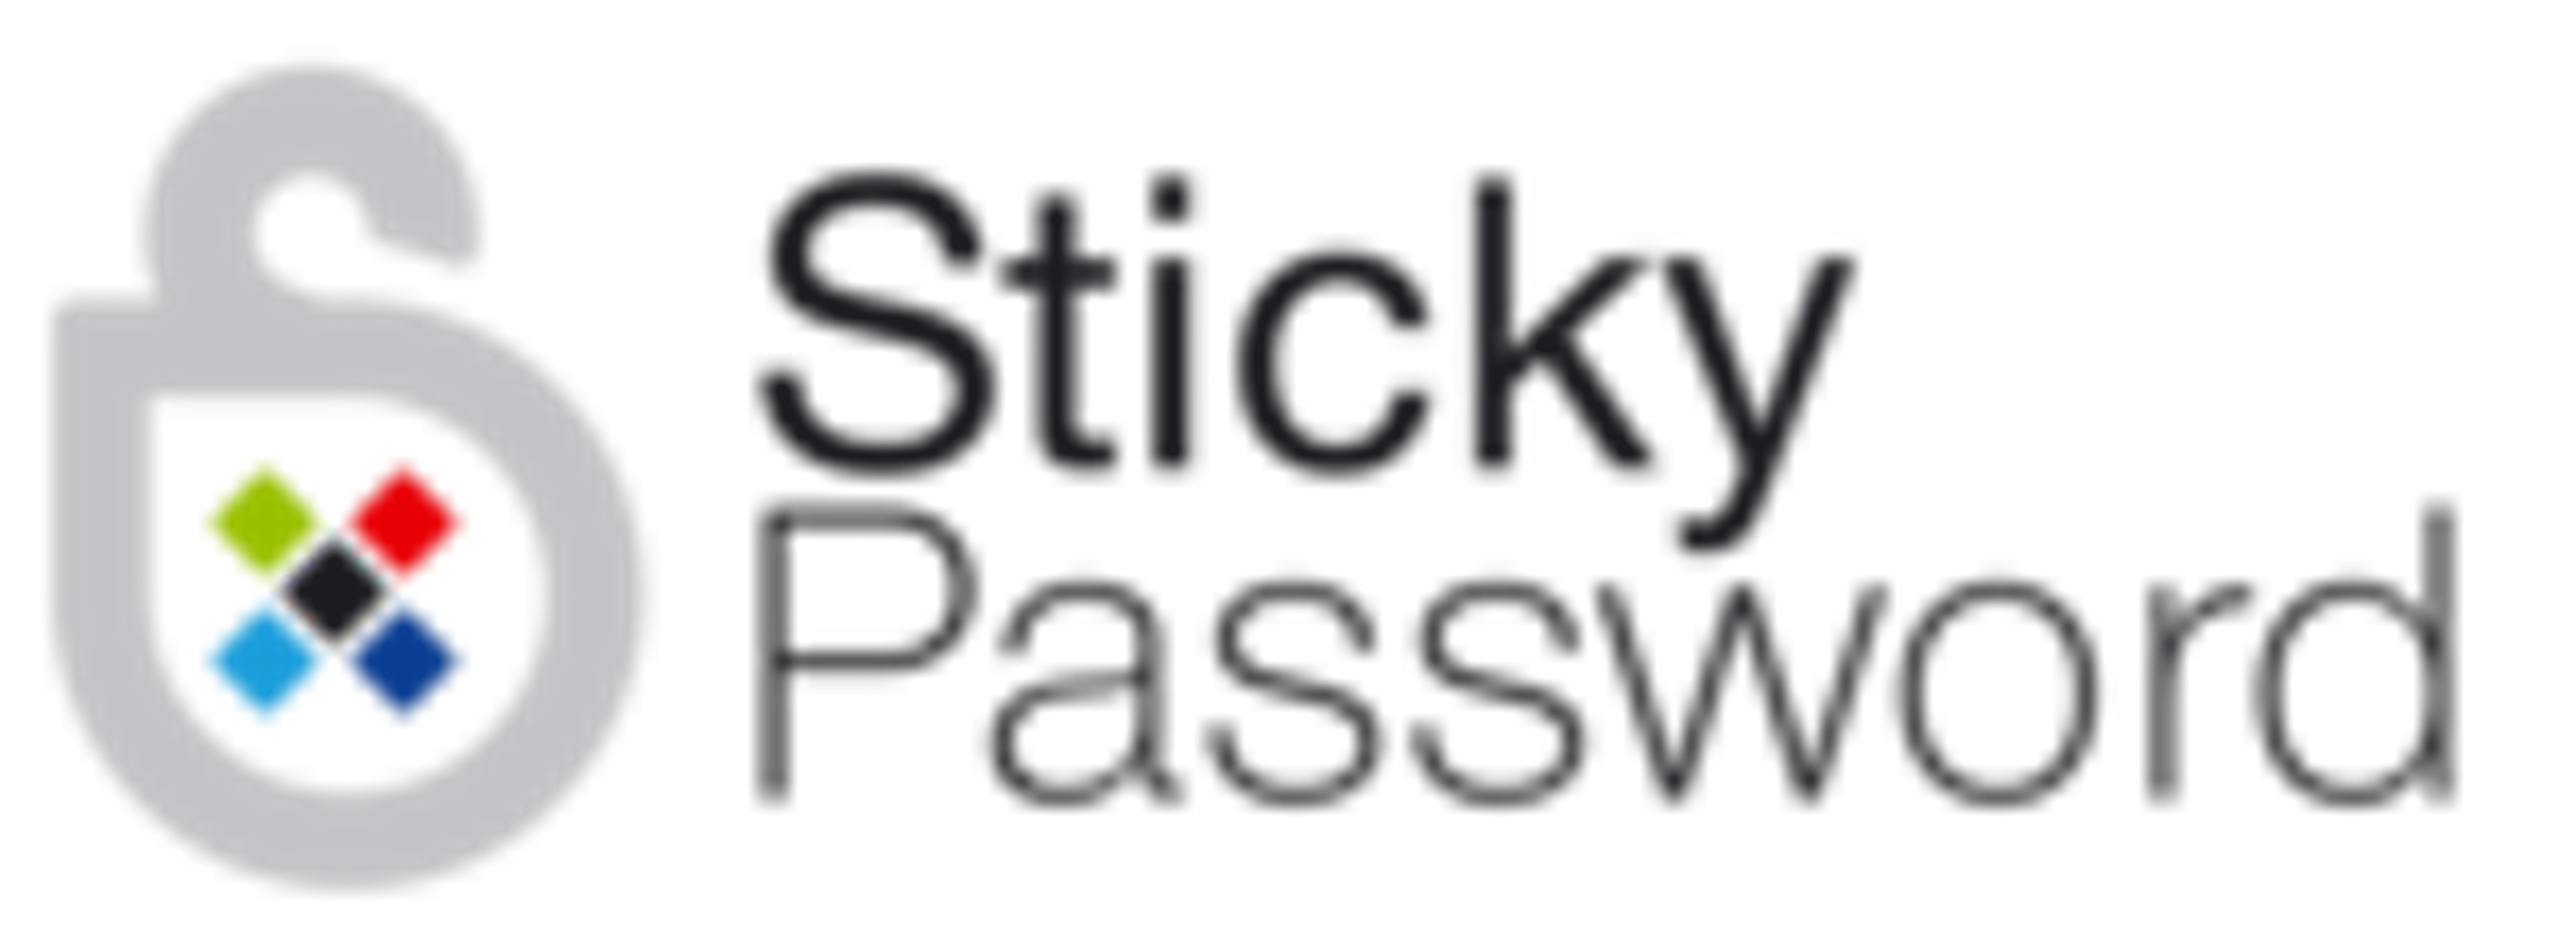 Sticky Password Logo